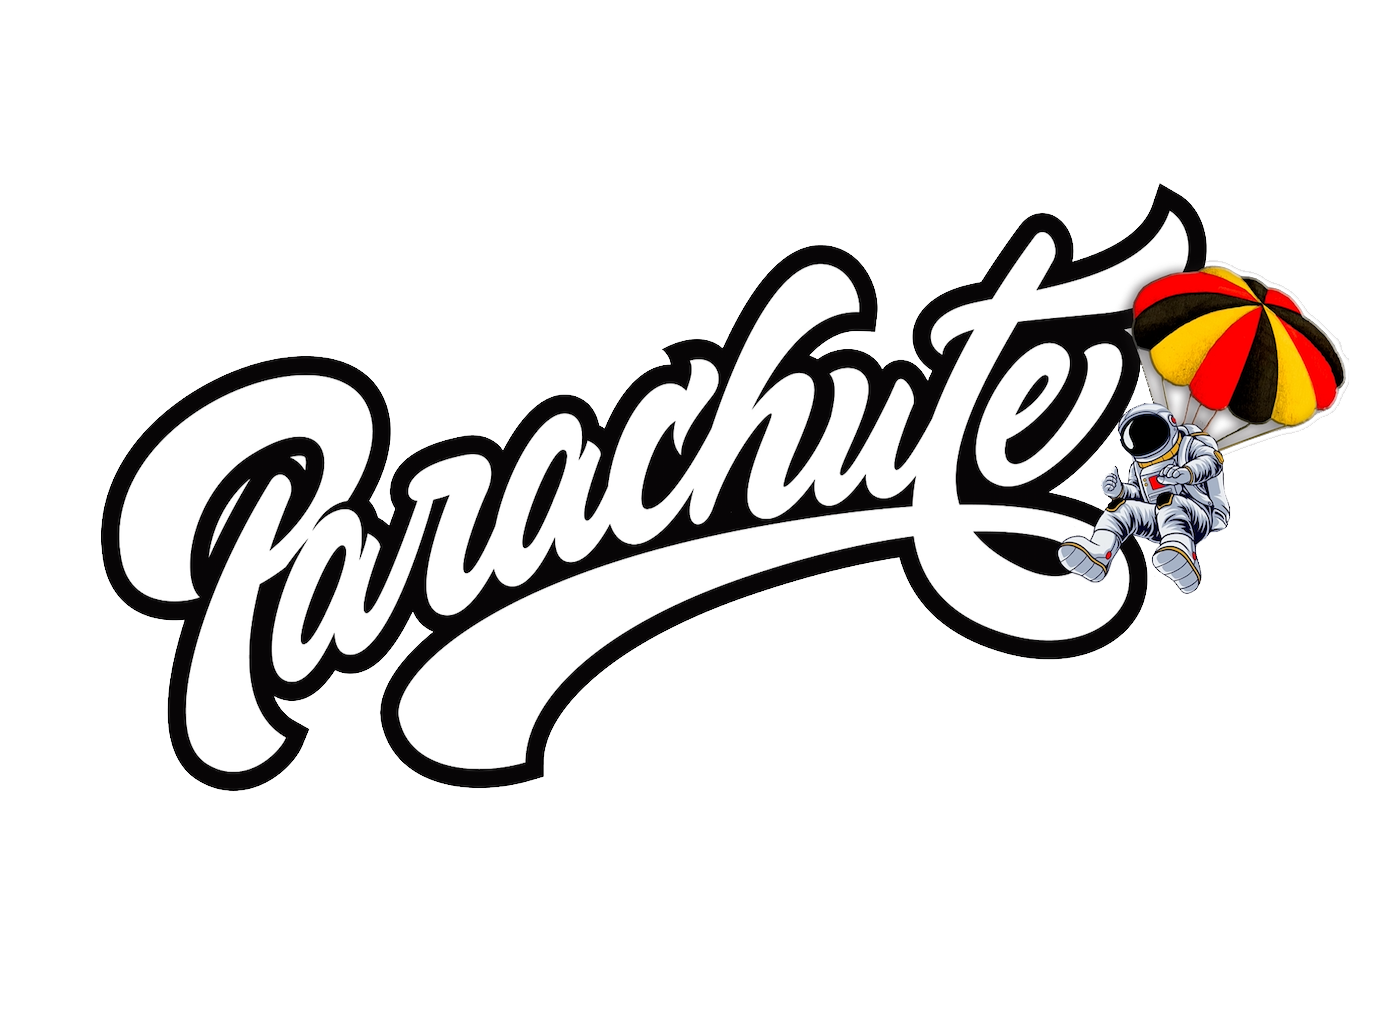 ParachuteLifestyle